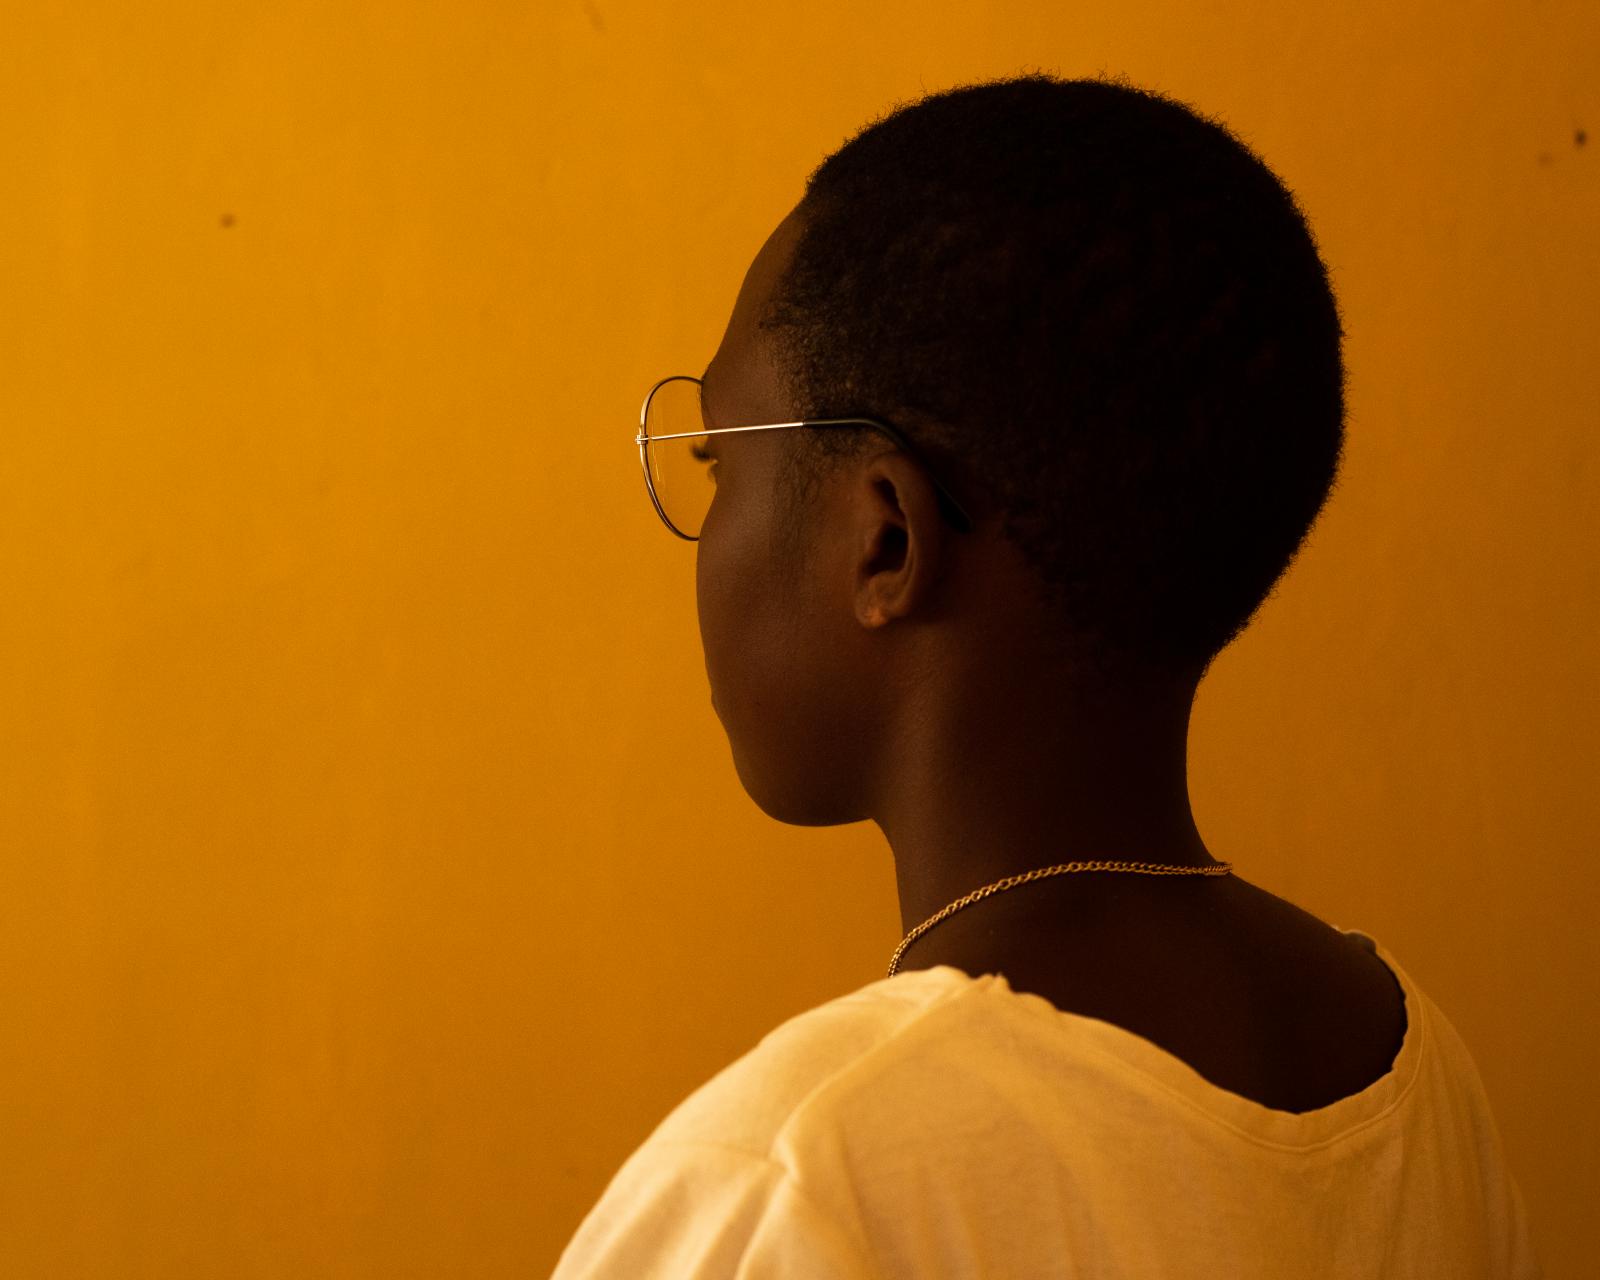 Image from Surviving Bery: A Girlhood Trauma | DeLovie Kwagala  - “He always made it feel like we had a choice to...